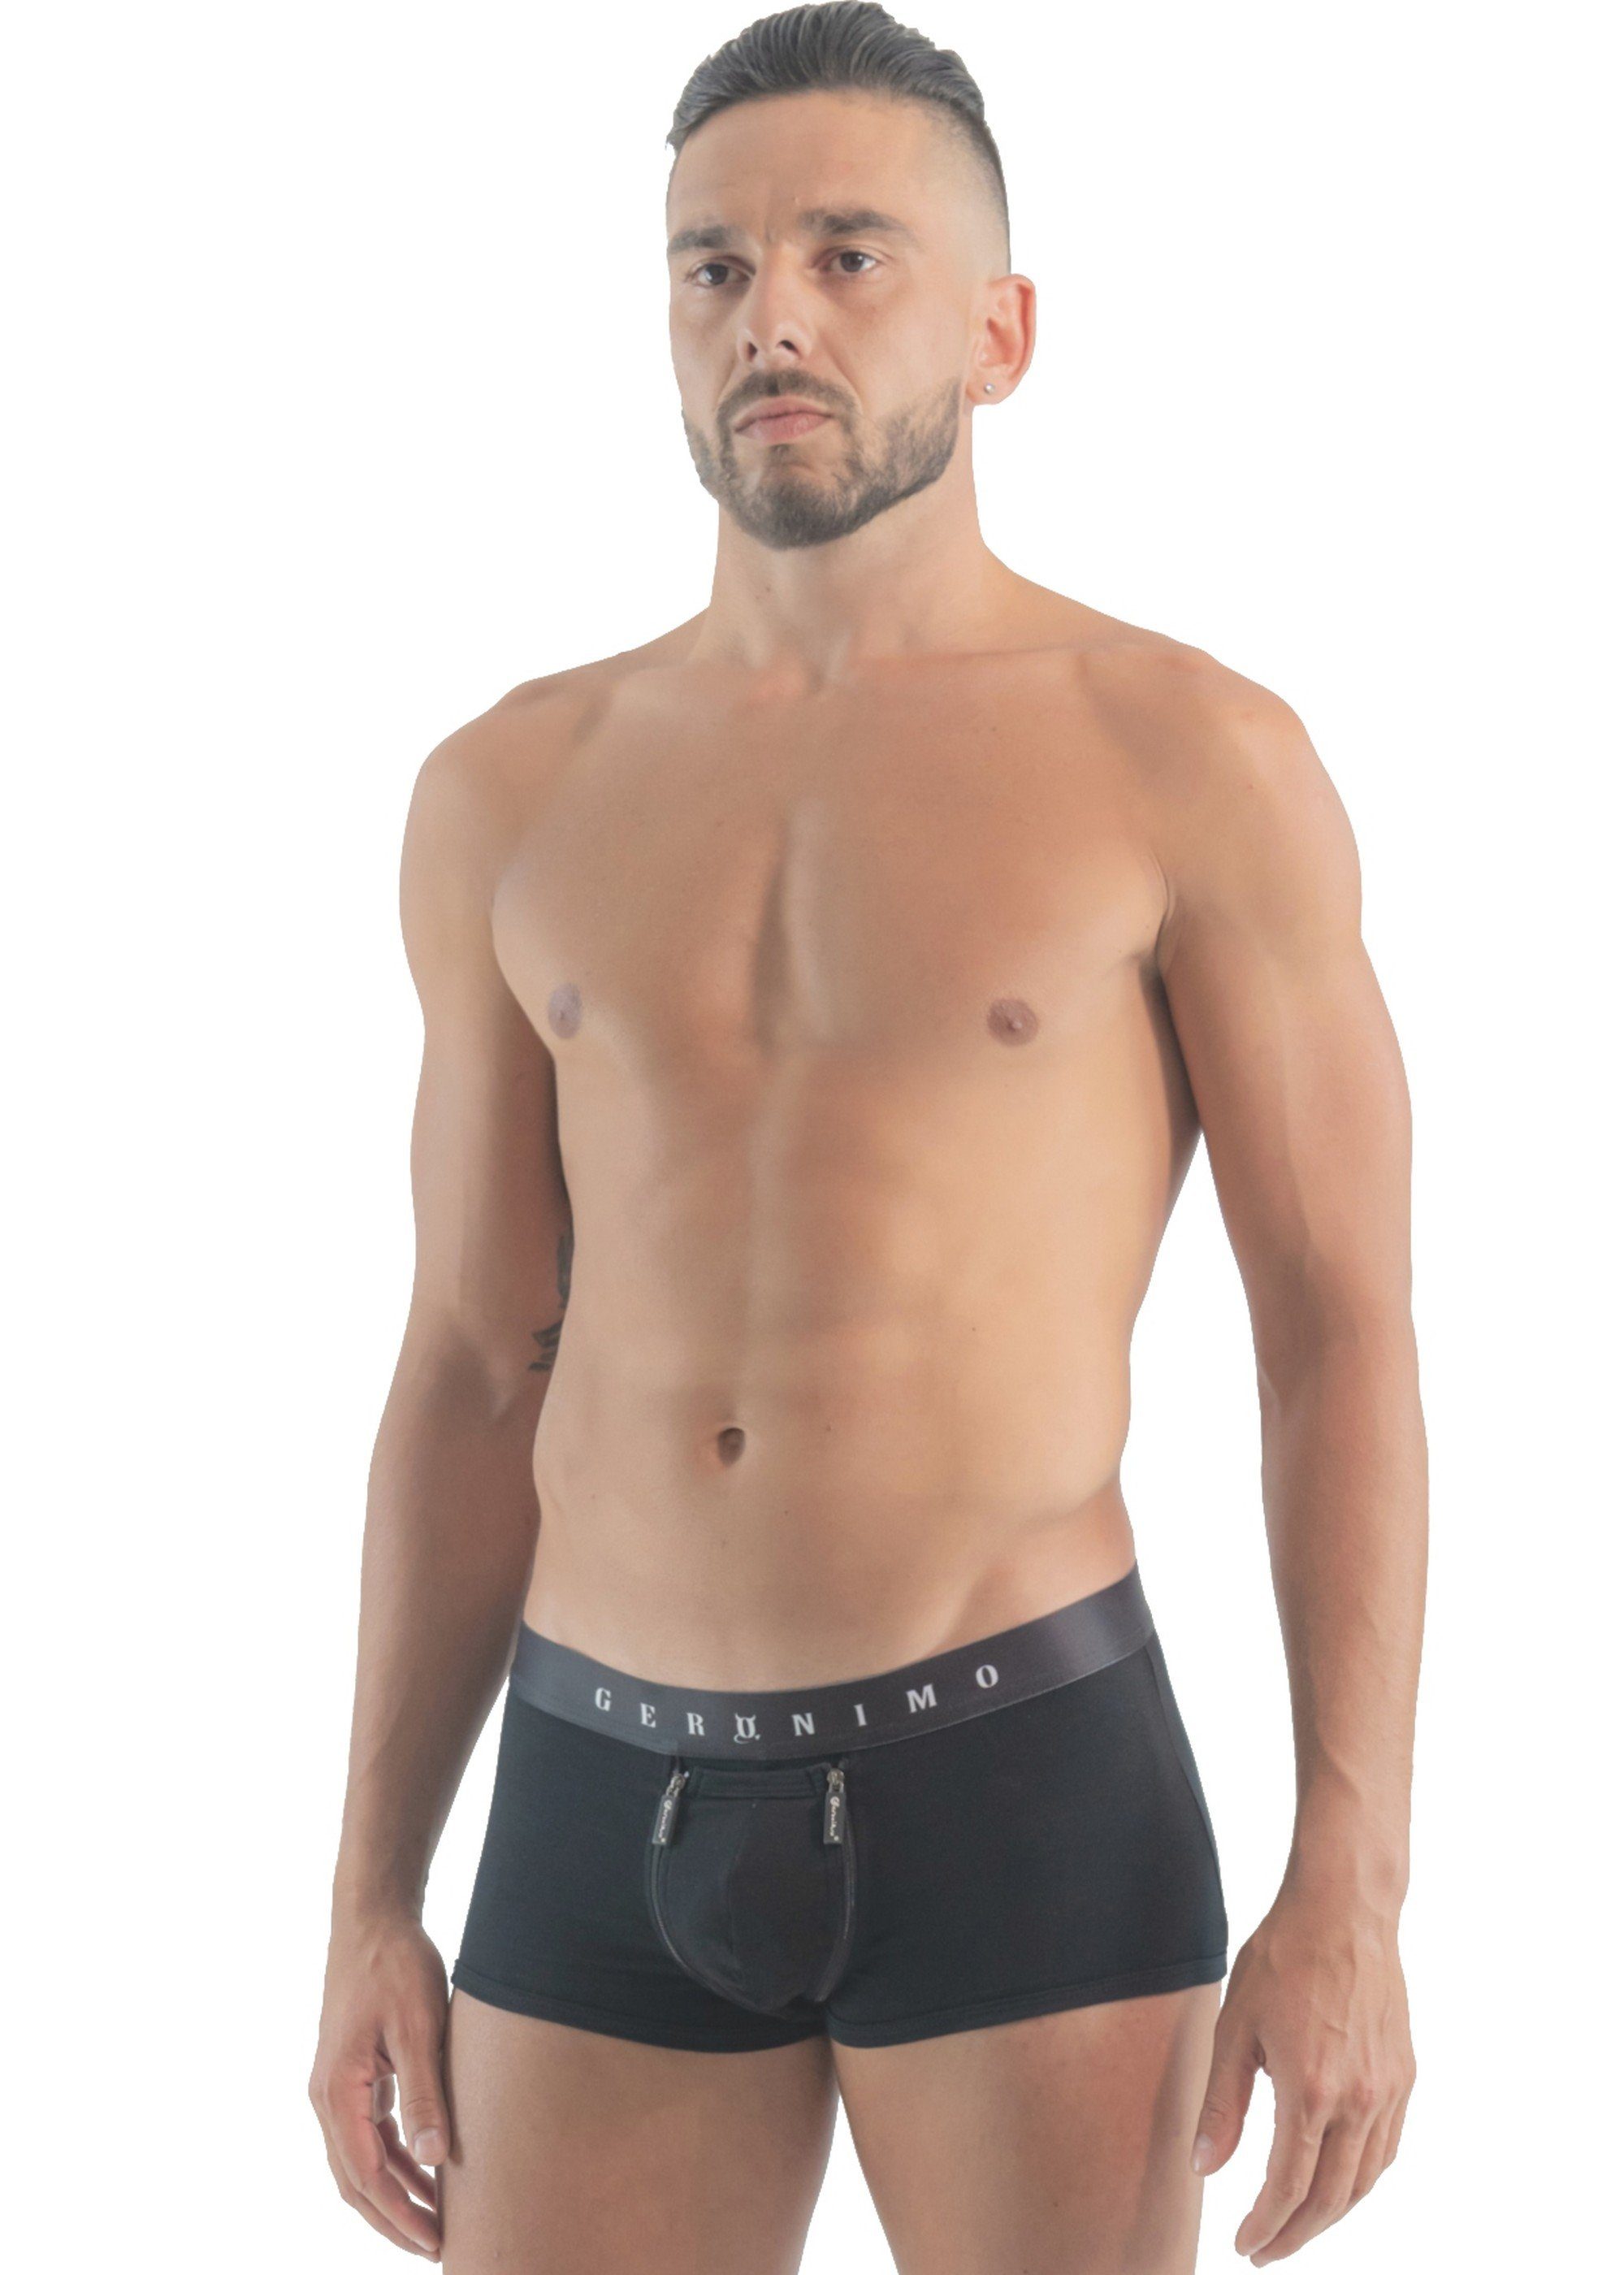 Geronimo 1-St) mit Erotic Reißverschluss Boxershorts or Boxer Push Zipp Black (Mini-Boxer, erotisch